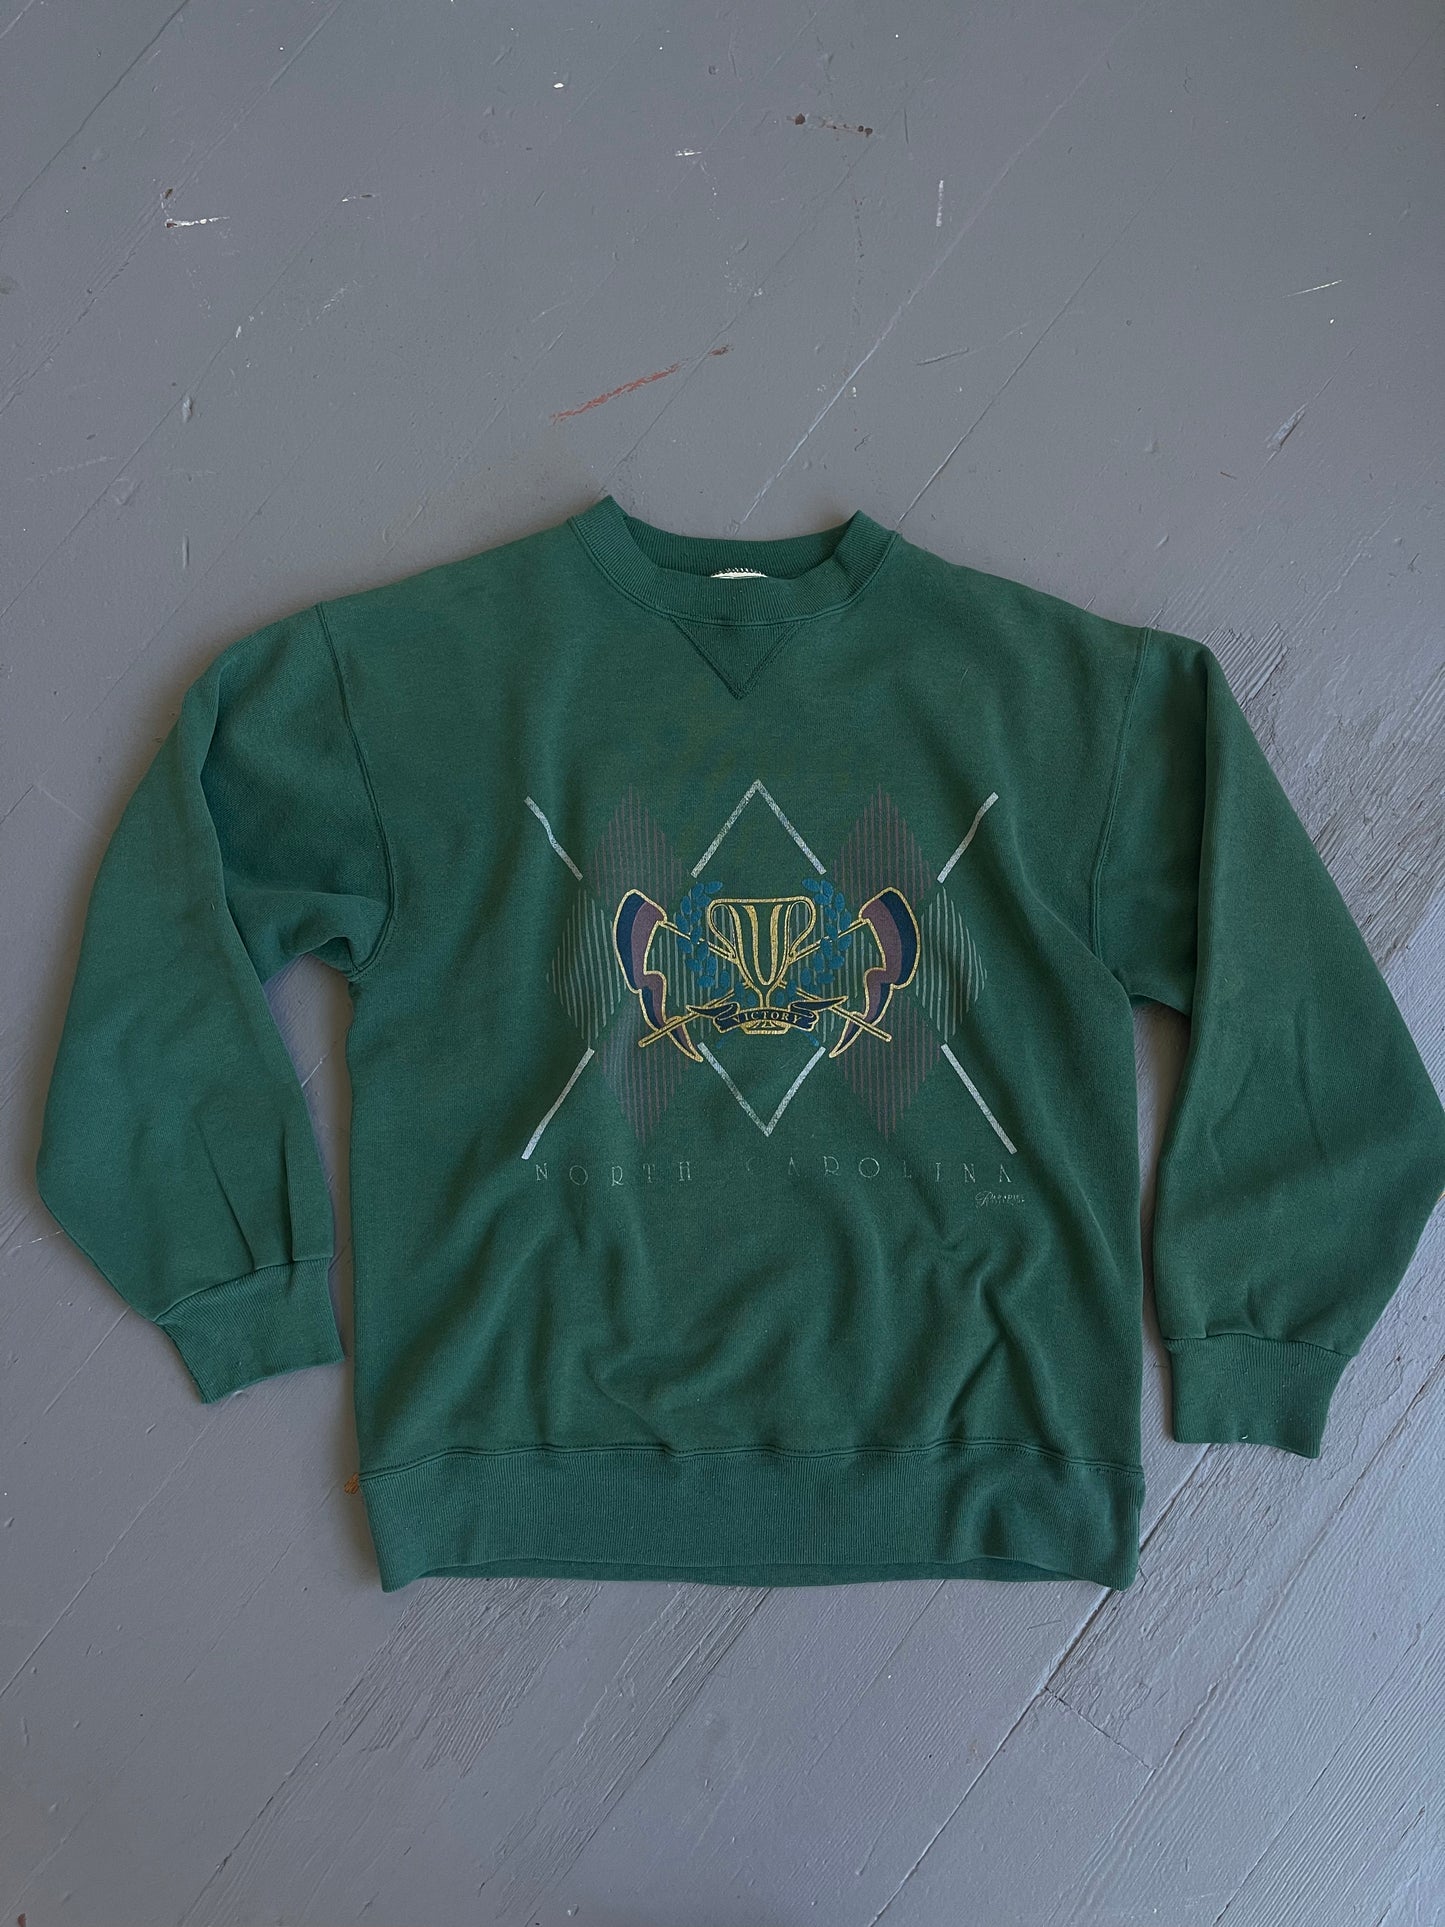 Vintage North Carolina Souvenir Sweatshirt - S/M